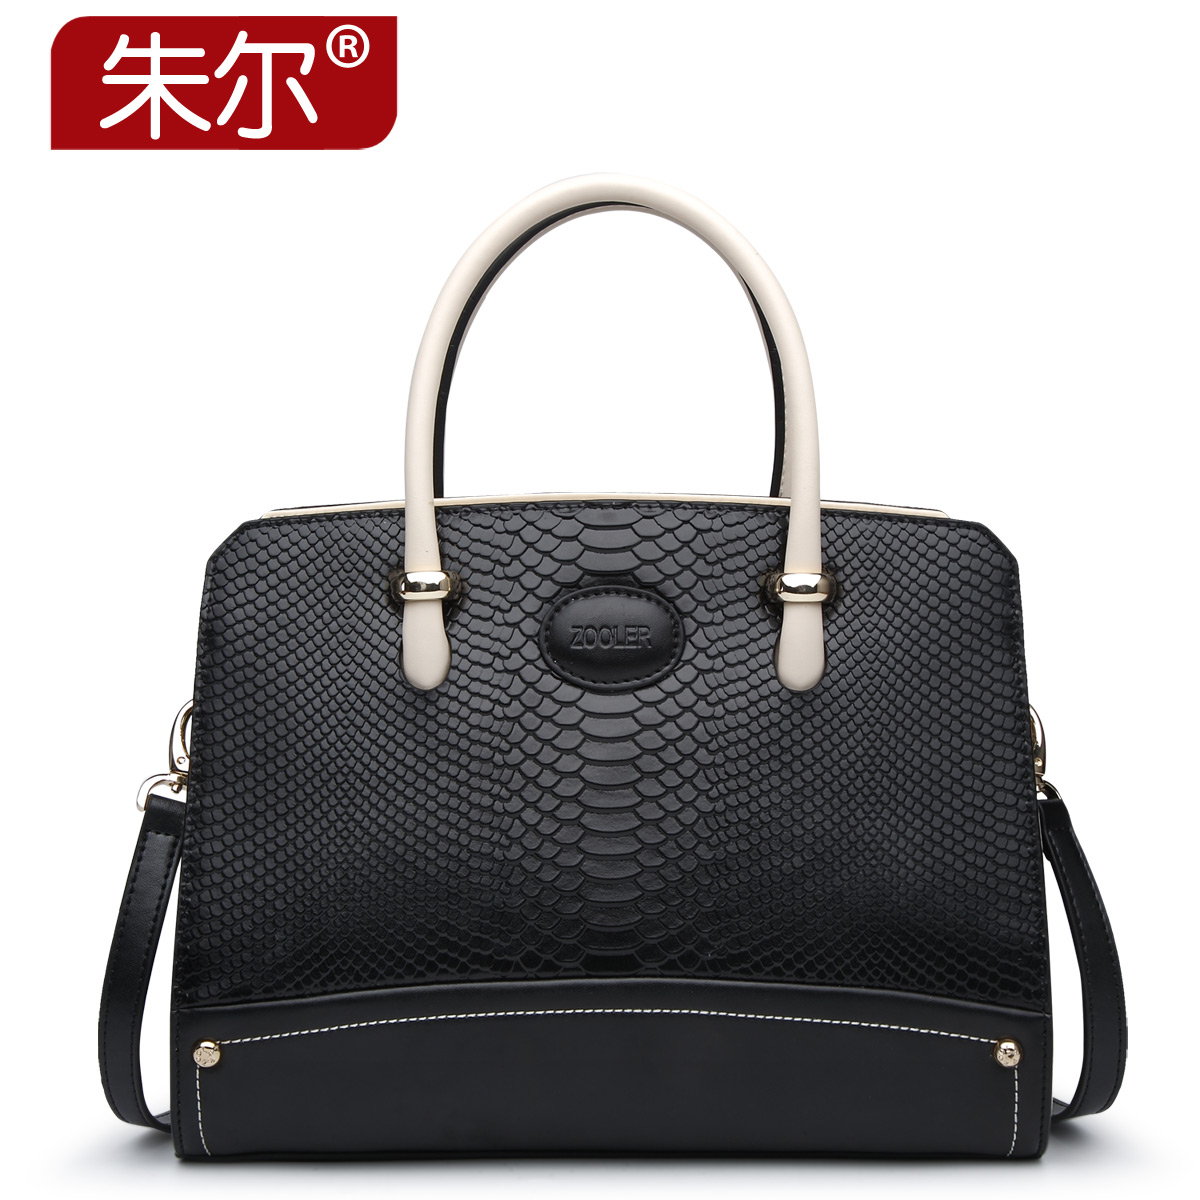 New arrival 2015 serpentine pattern women's cowhide handbag women's bags portable elegant one shoulder bag female